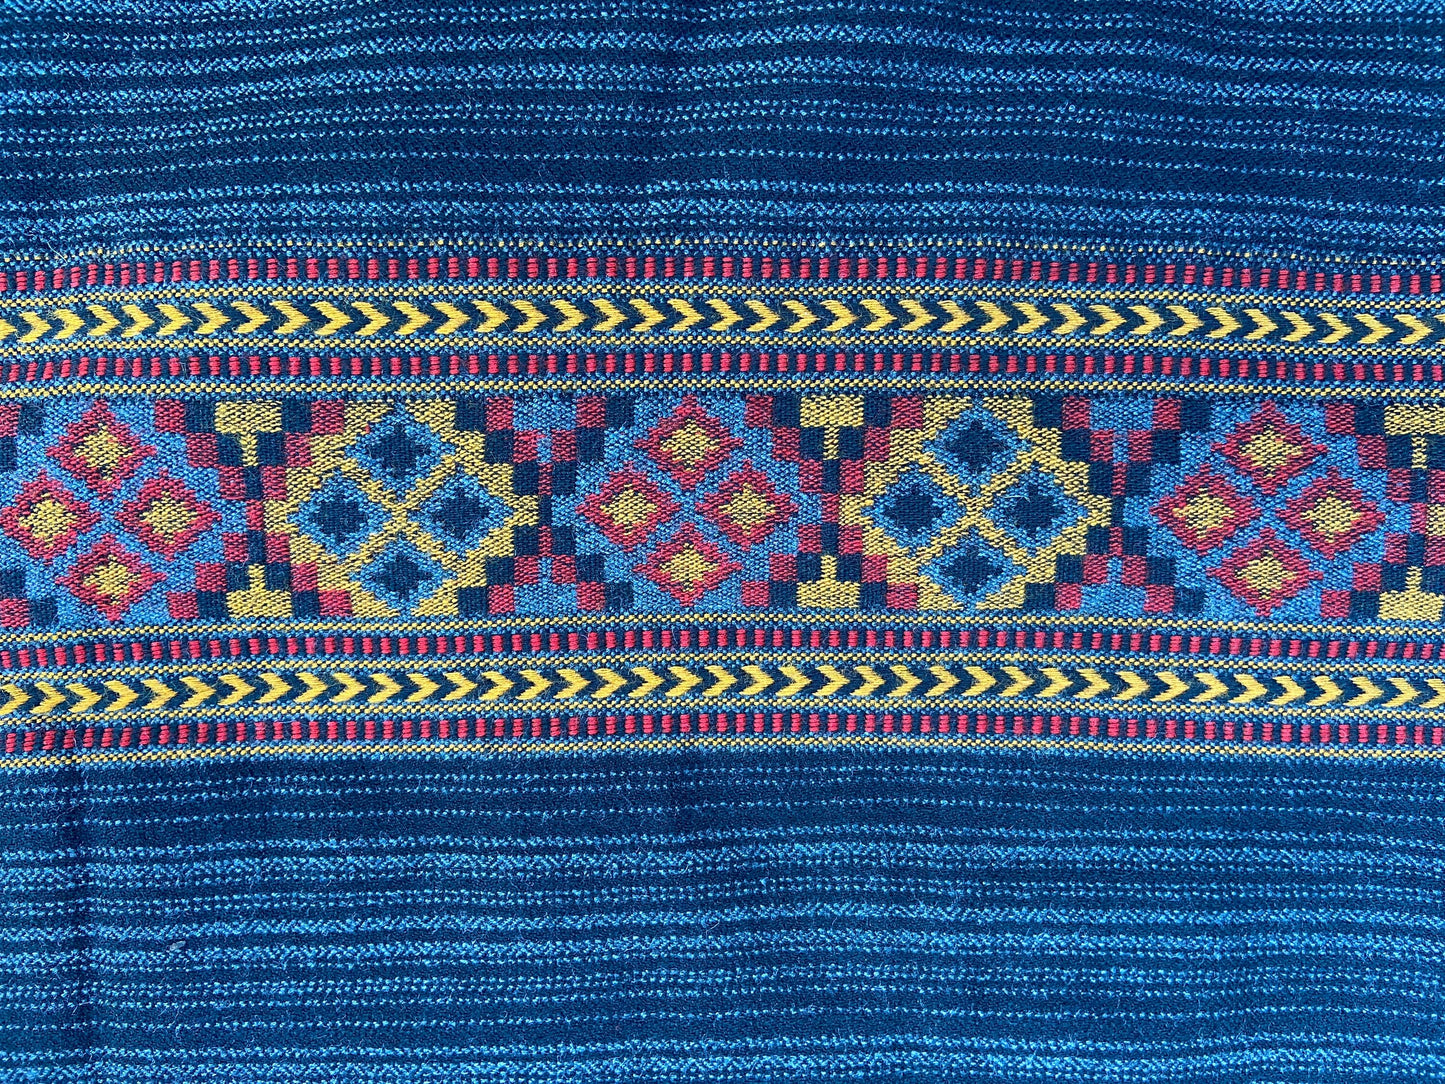 JHANA Meditation Prayer Shawl Blanket Cosy Grey Black Cashmere Yak Wool and Acrylic Wool Tibetan Tribal Celtic Embroidery Boho Zen AJJAYA